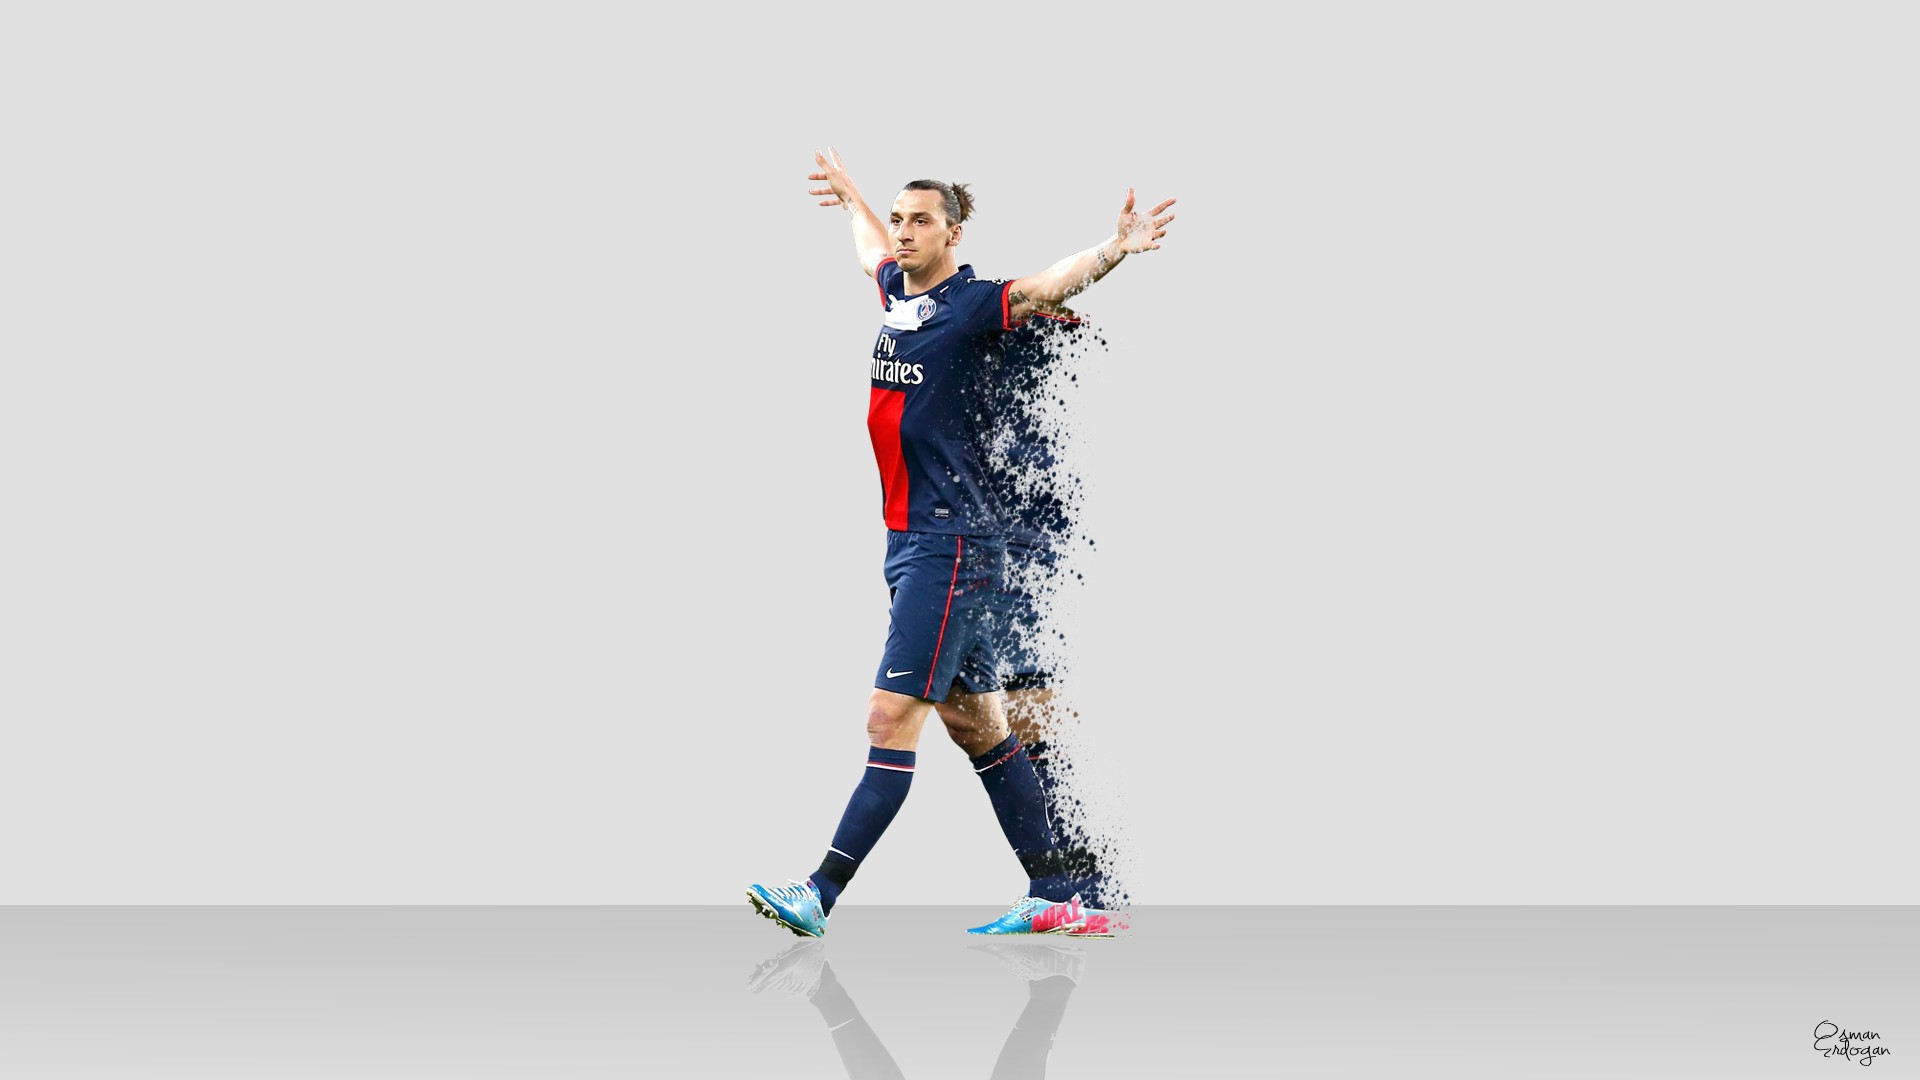 People 1920x1080 Zlatan Ibrahimovic Paris Saint-Germain Nike footballers soccer men sport simple background